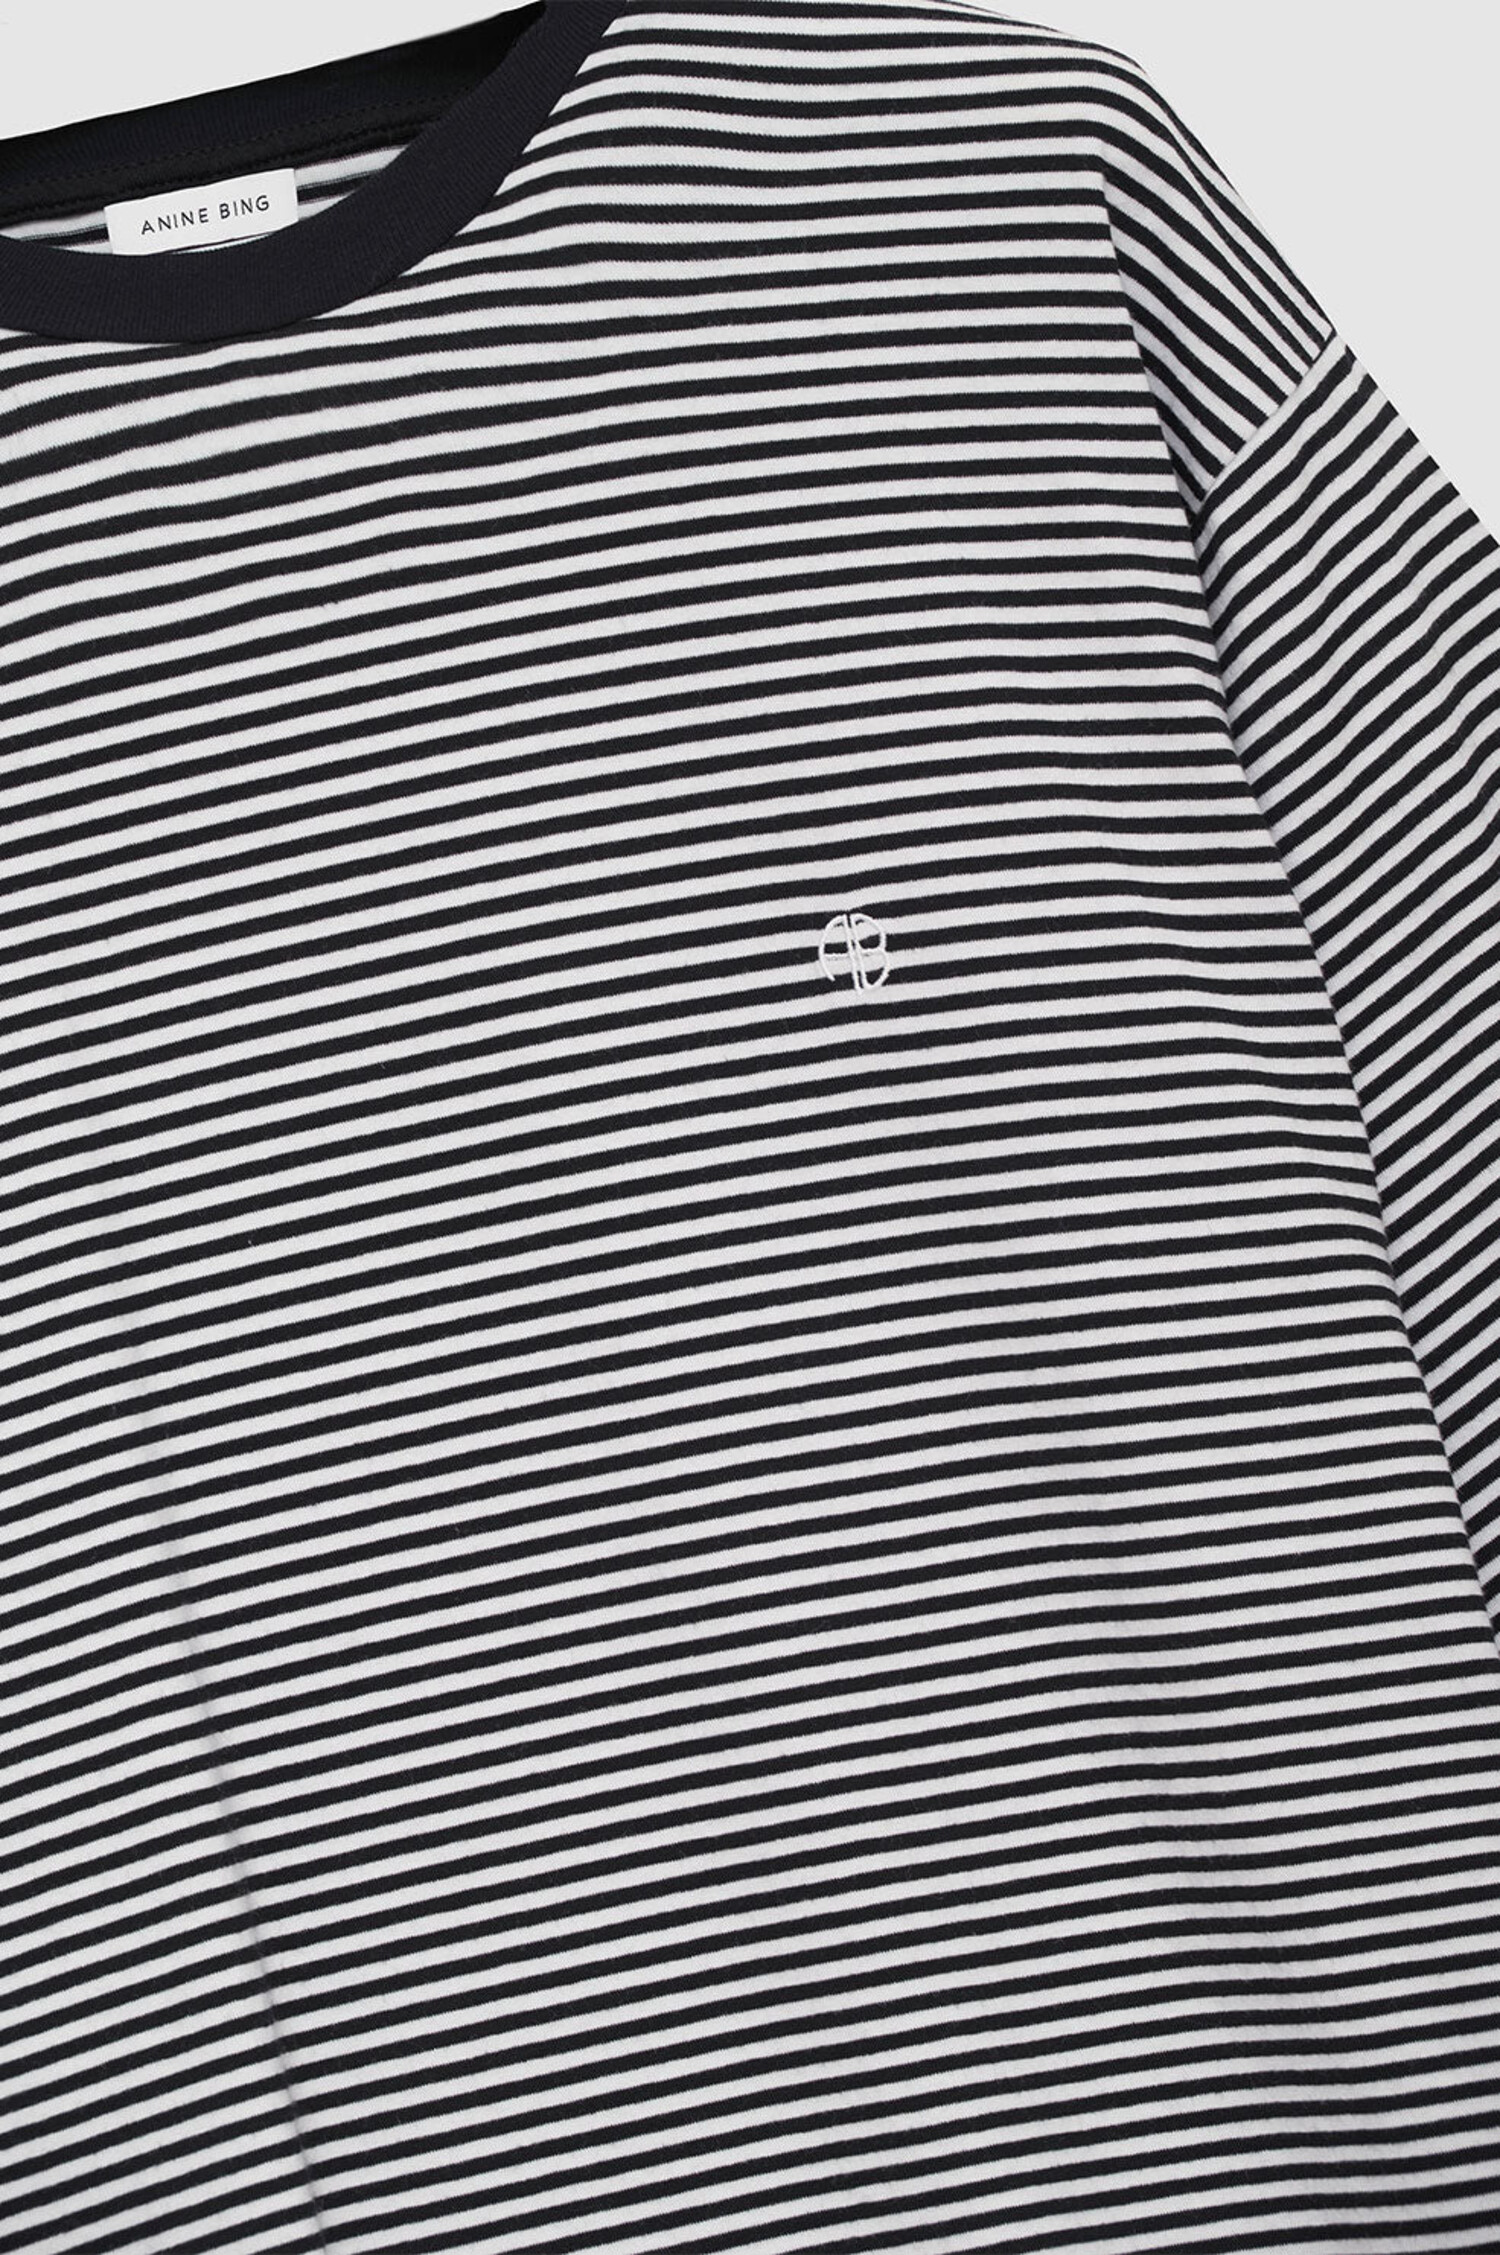 Anine Bing | Sloan Denim Shirt - Stripe | L